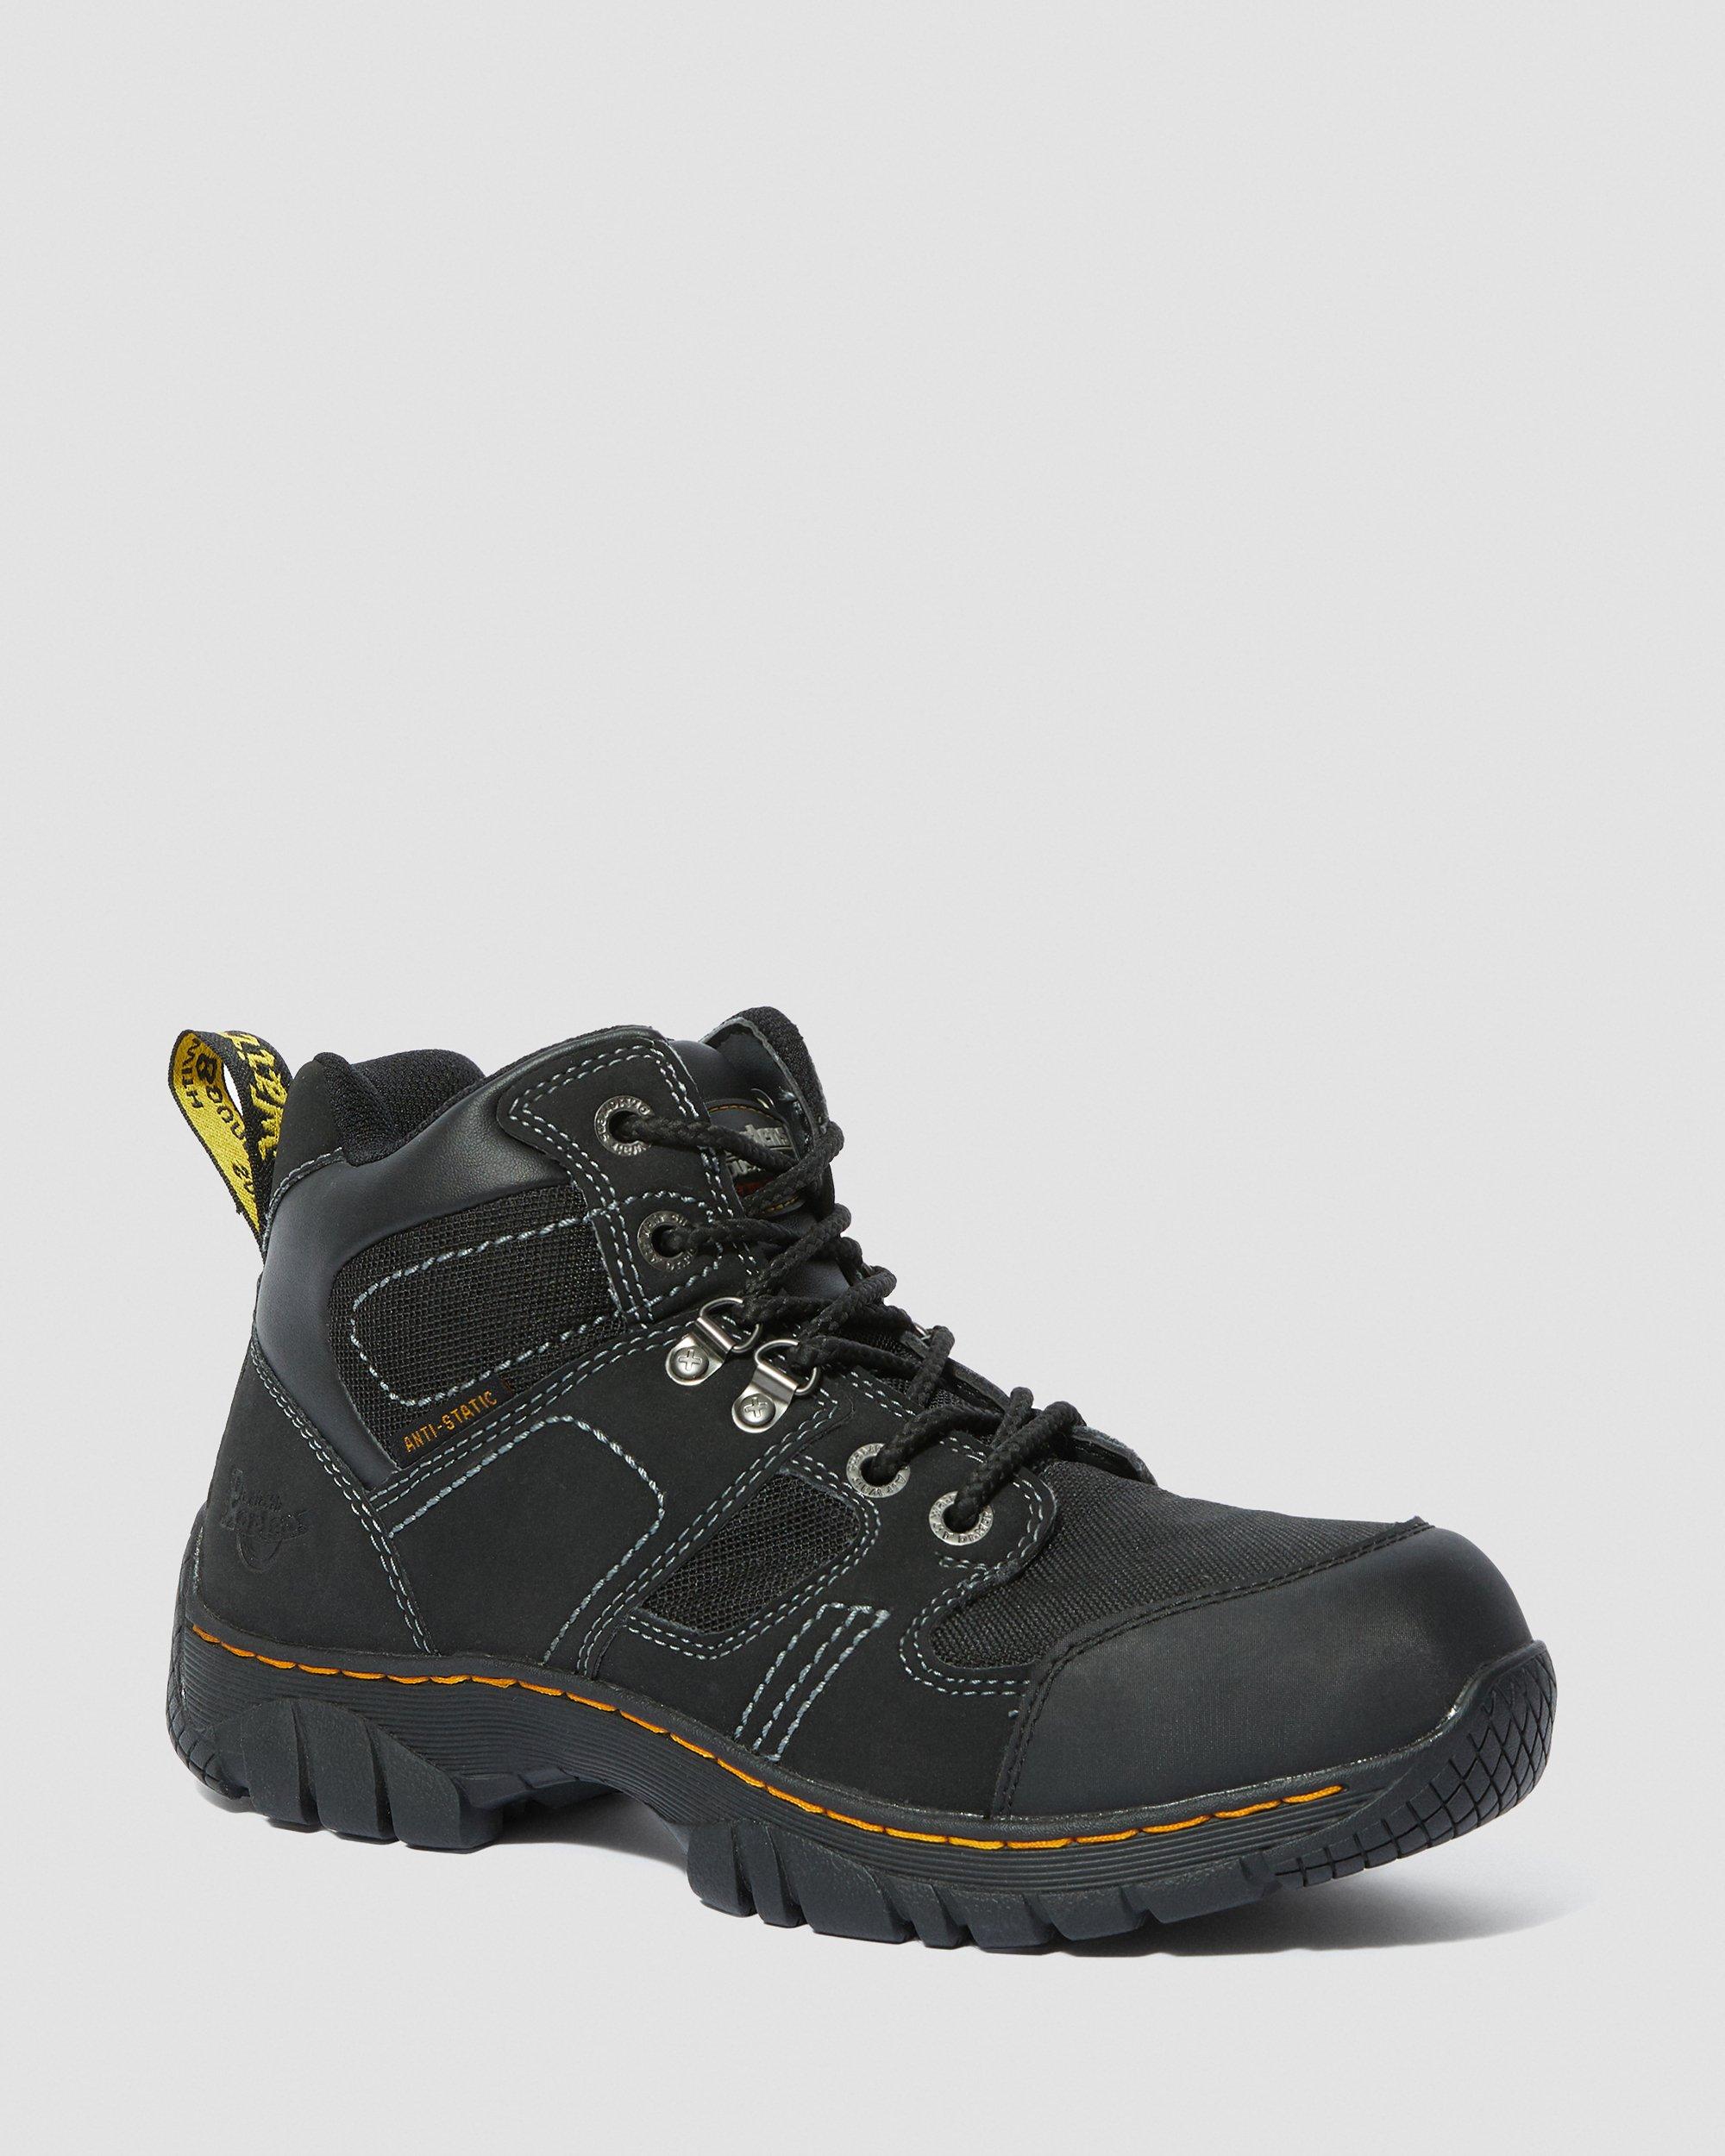 black safety boots uk